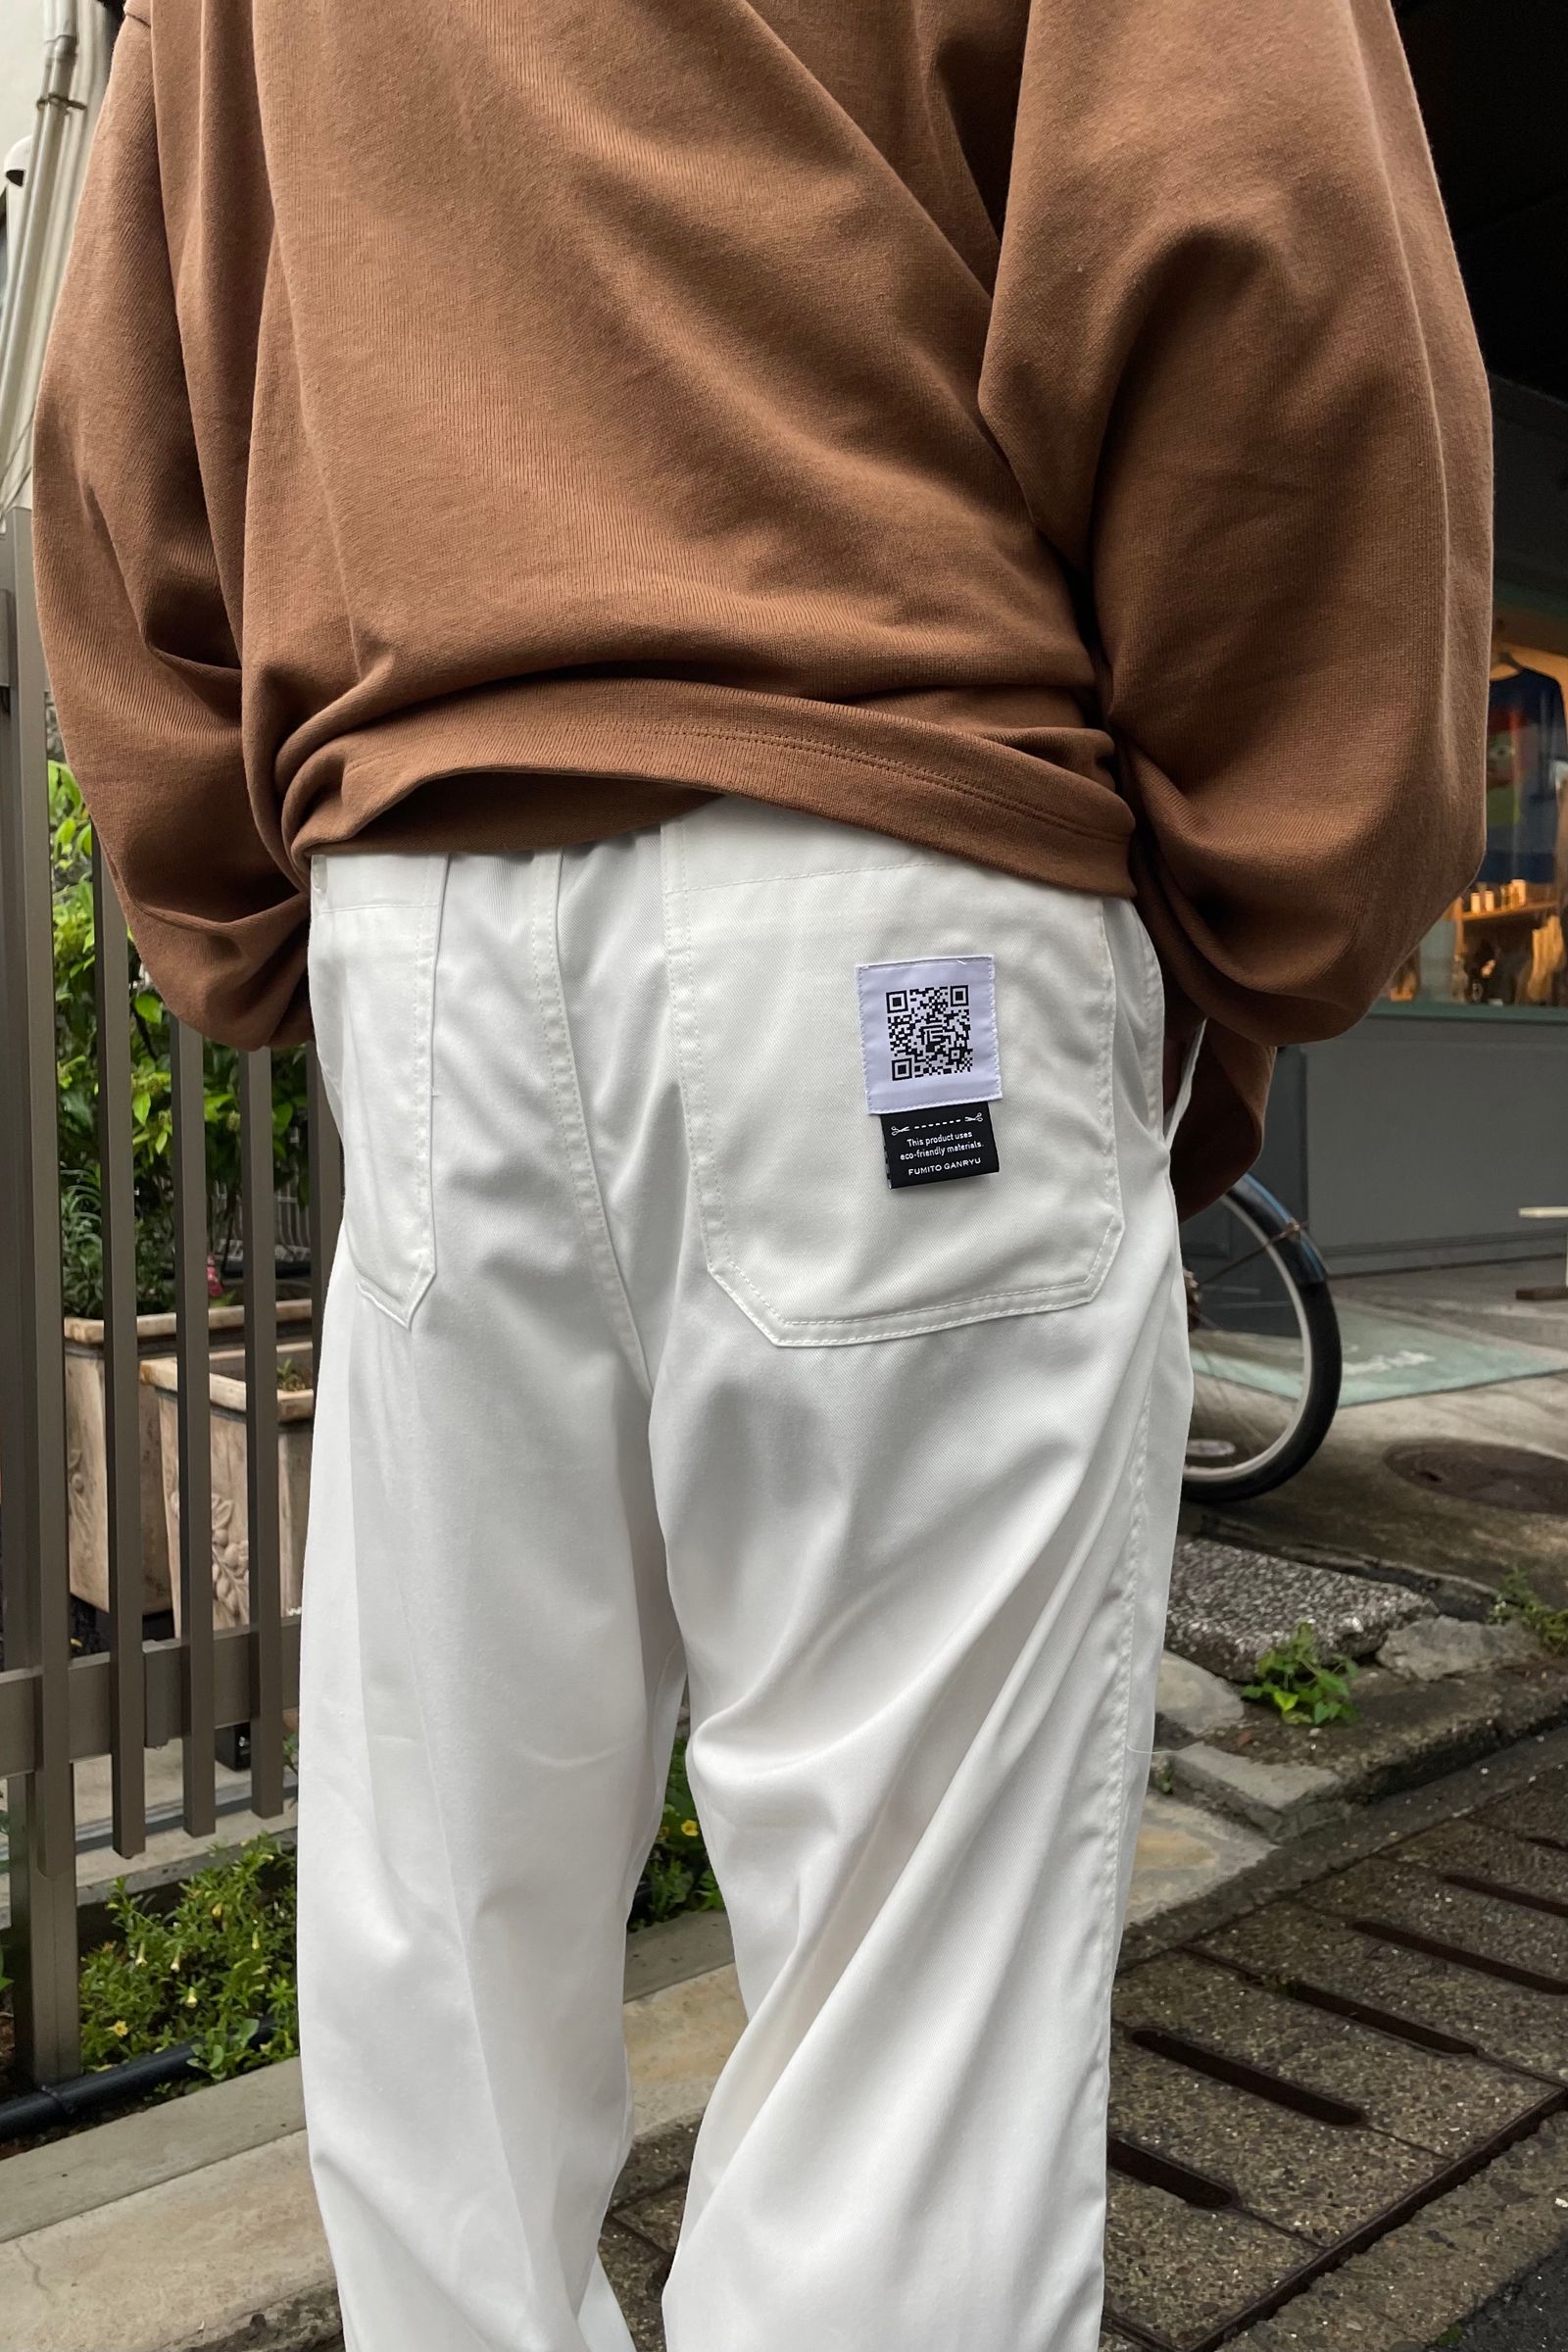 FUMITO GANRYU - warm up raboratory pants 21aw | asterisk